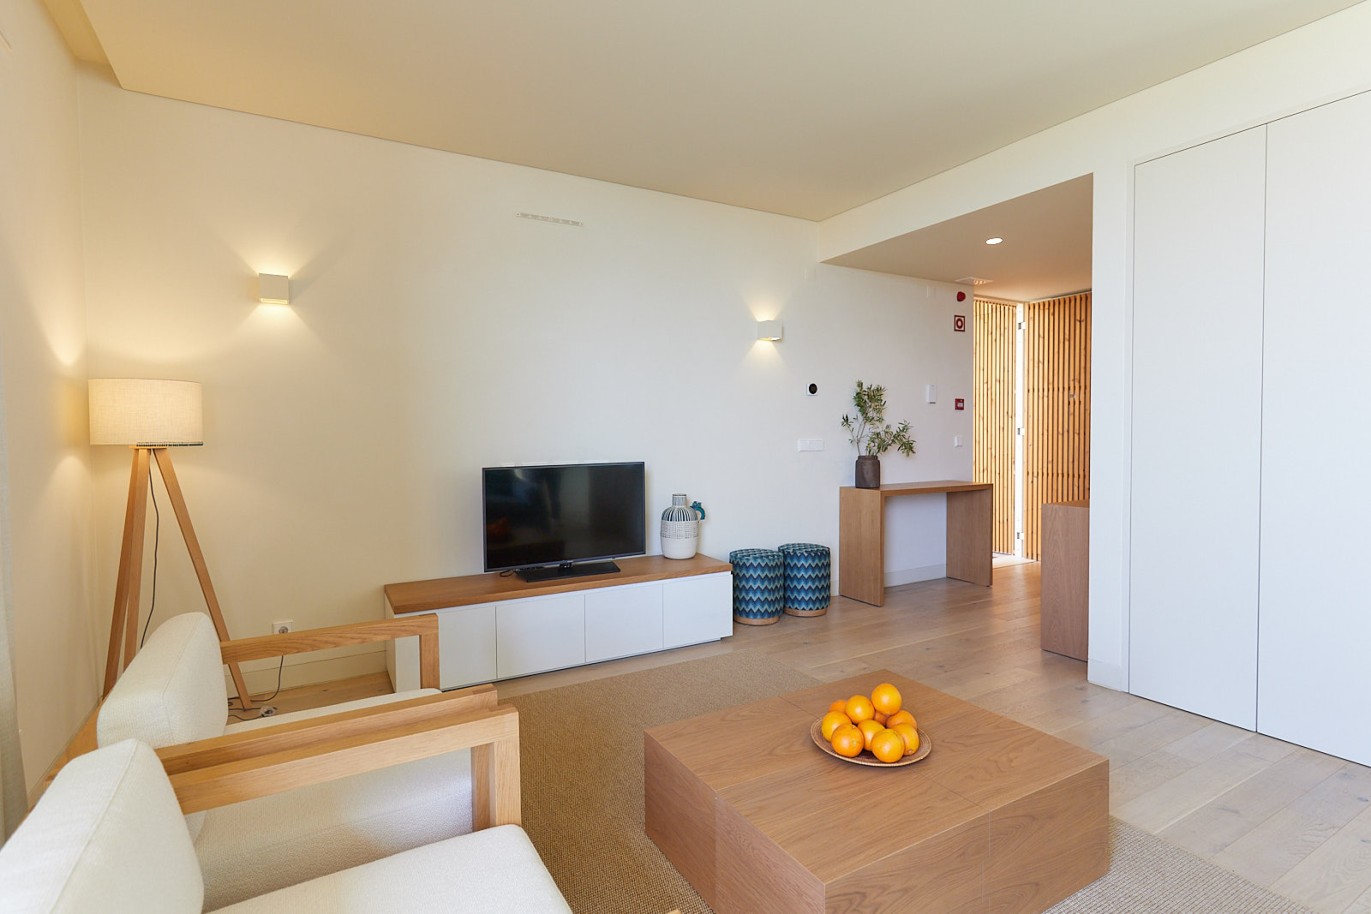 2 bedroom apartment in resort, for sale in Porches, Algarve_229157